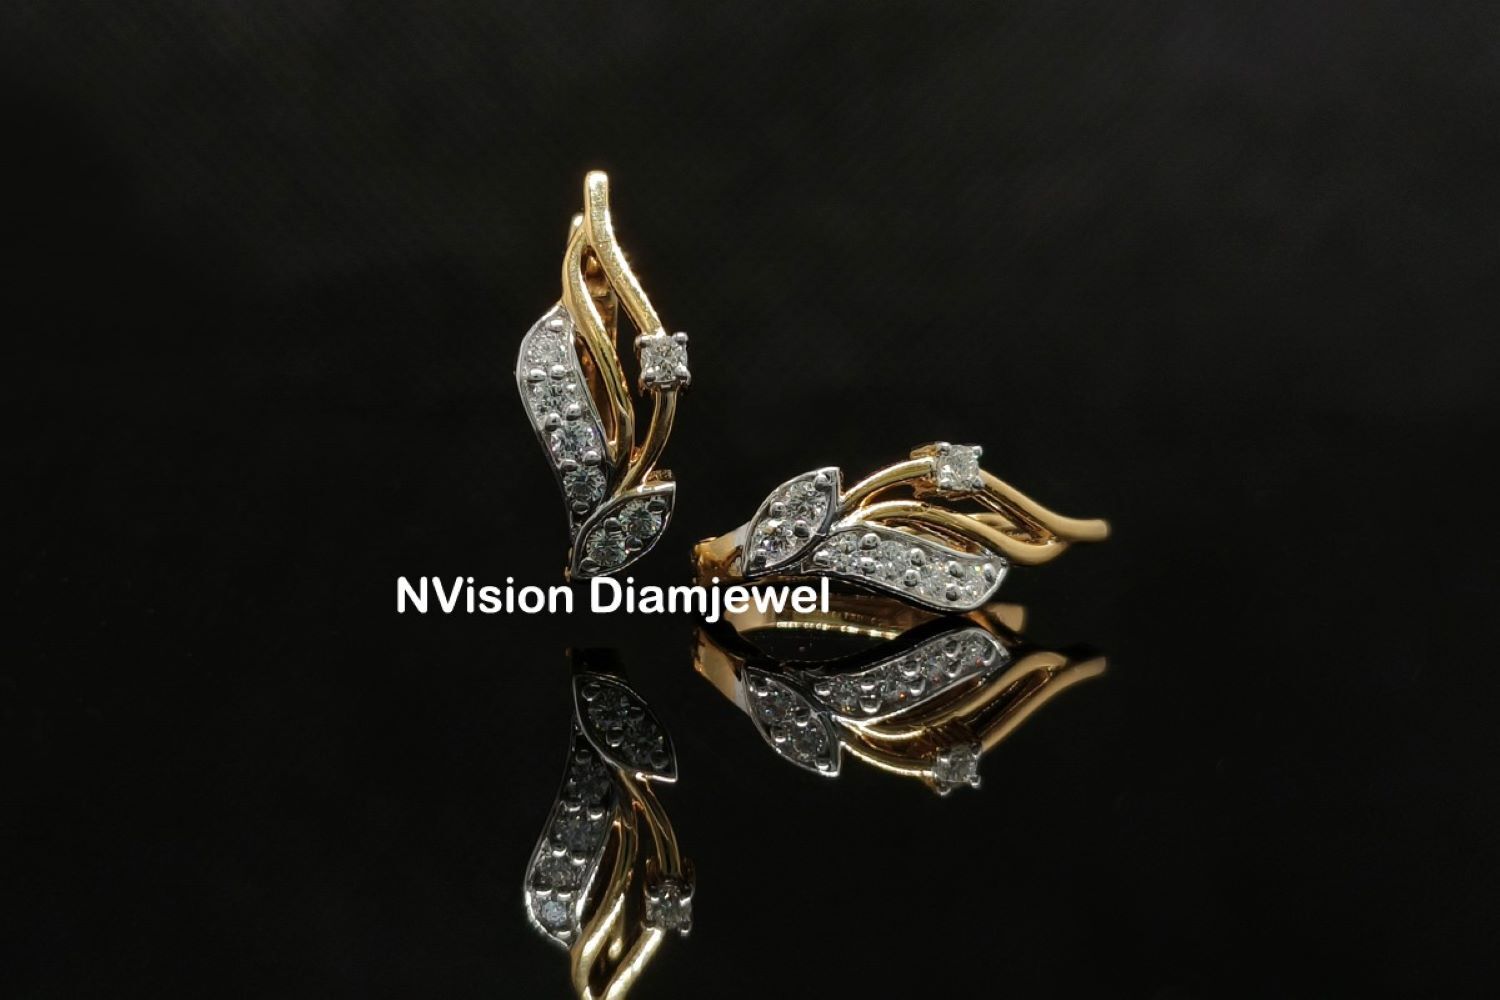 Natural Diamond Bali Earrings